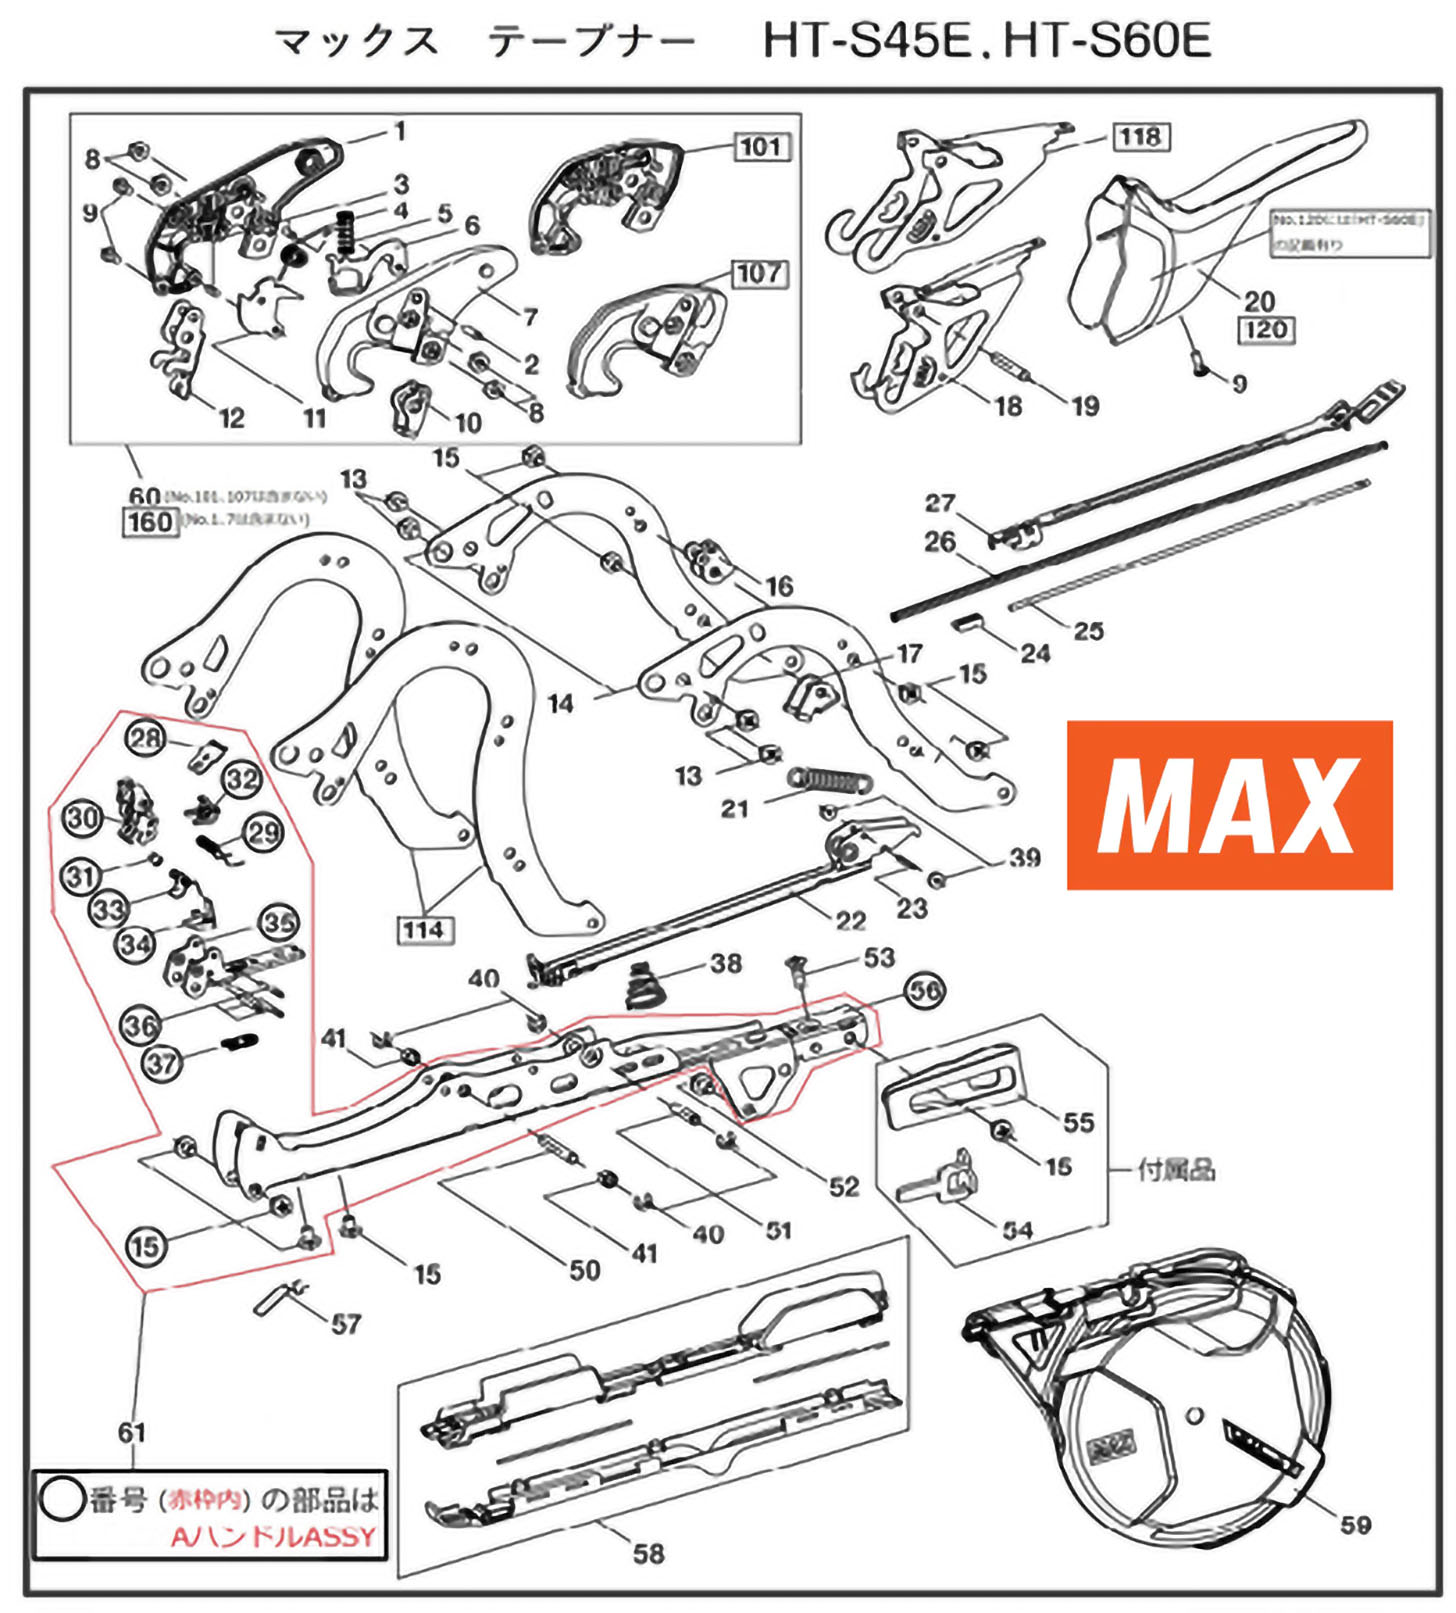 MAX Tapener Part HT70115 A HANDLE S(HT-S) Fits MAX HT-S45E #56